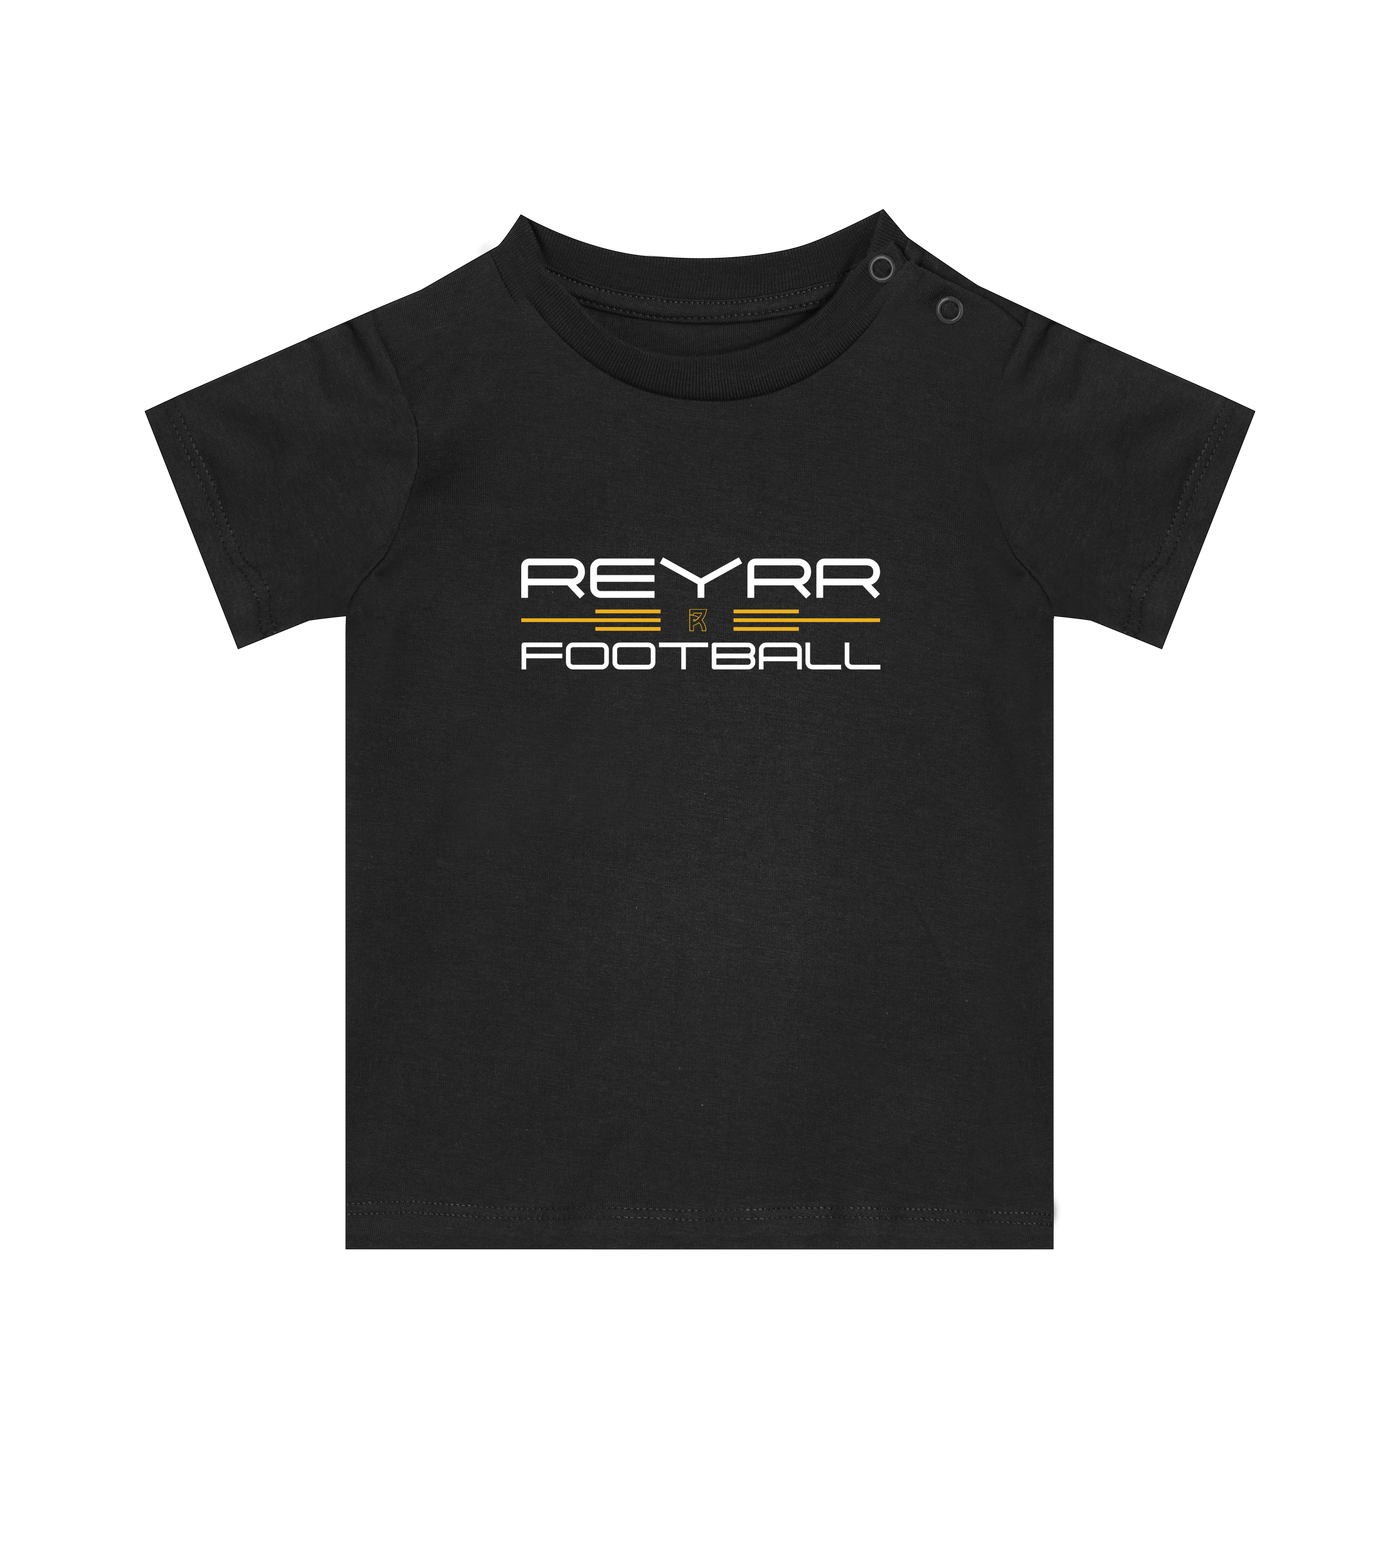 Reyrr Football Baby T-shirt - Premium t-shirt from REYRR STUDIO - Shop now at Reyrr Athletics